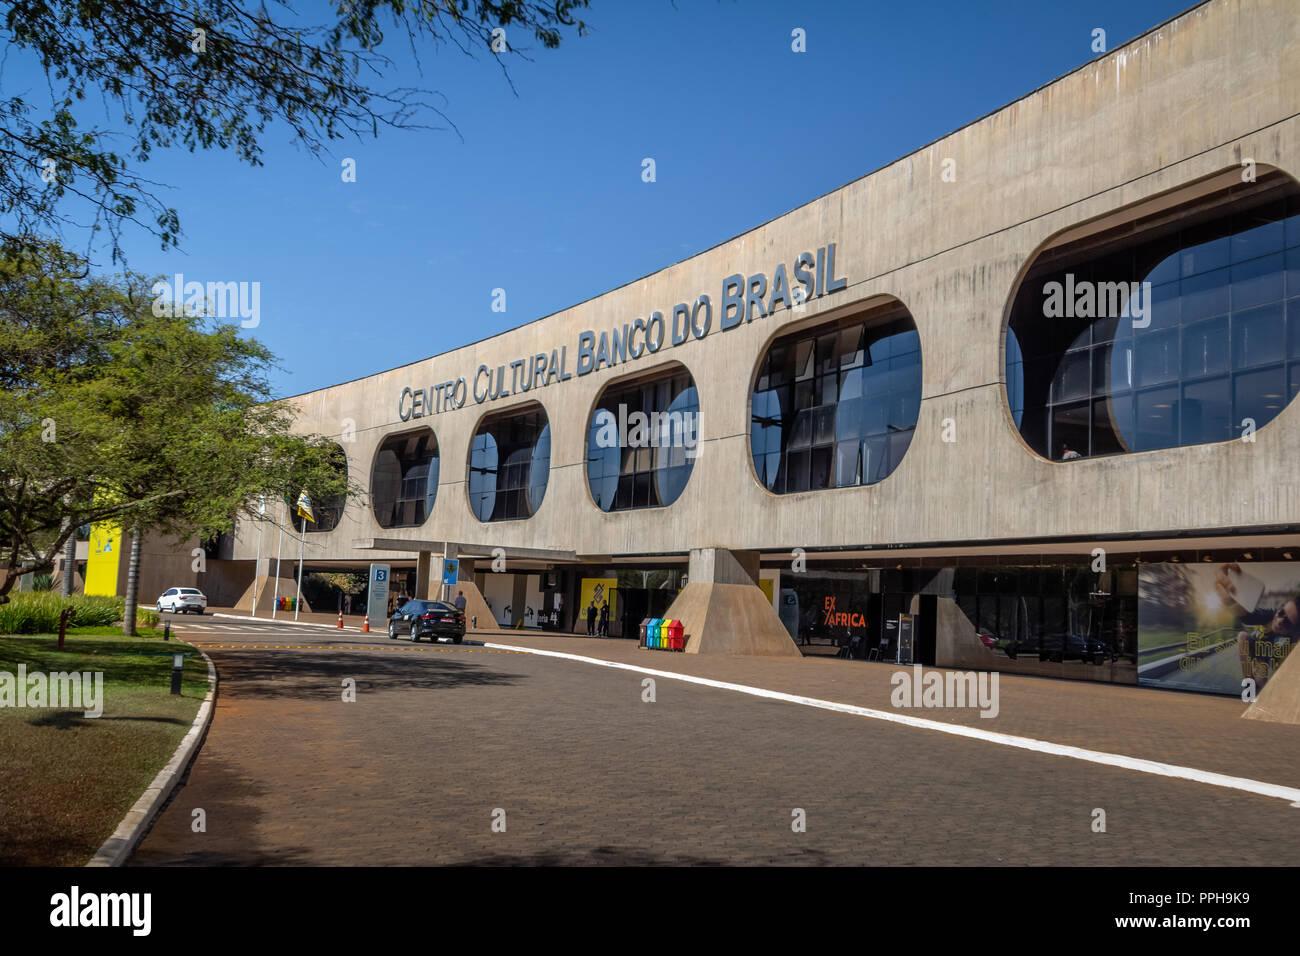 Centro Cultural Banco do Brasil - CCBB - Bank of Brazil Cultural Center - Brasilia, Distrito Federal, Brazil Stock Photo